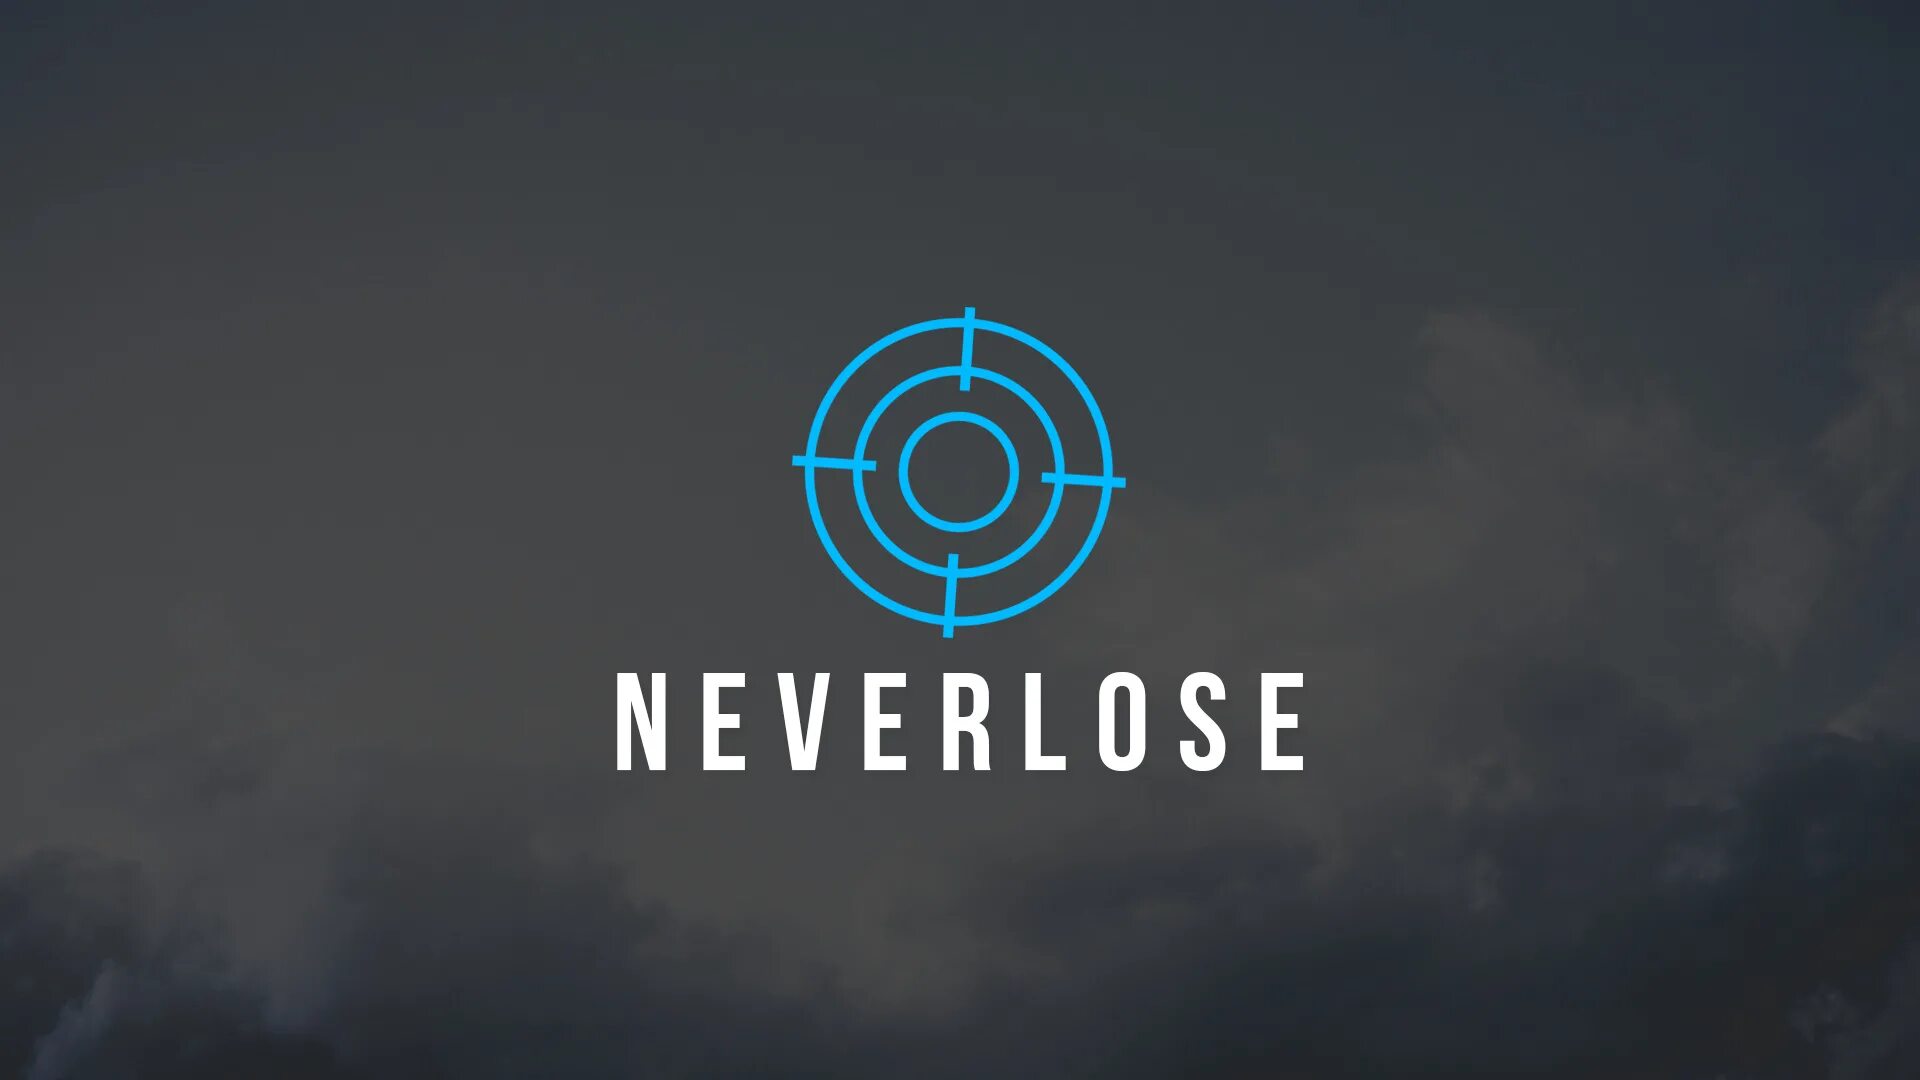 Neverlose.cc v1. Neverlose фото. Обои НЕВЕРЛУЗ. Neverlose.cc HVH Highlights. Https neverlose cc